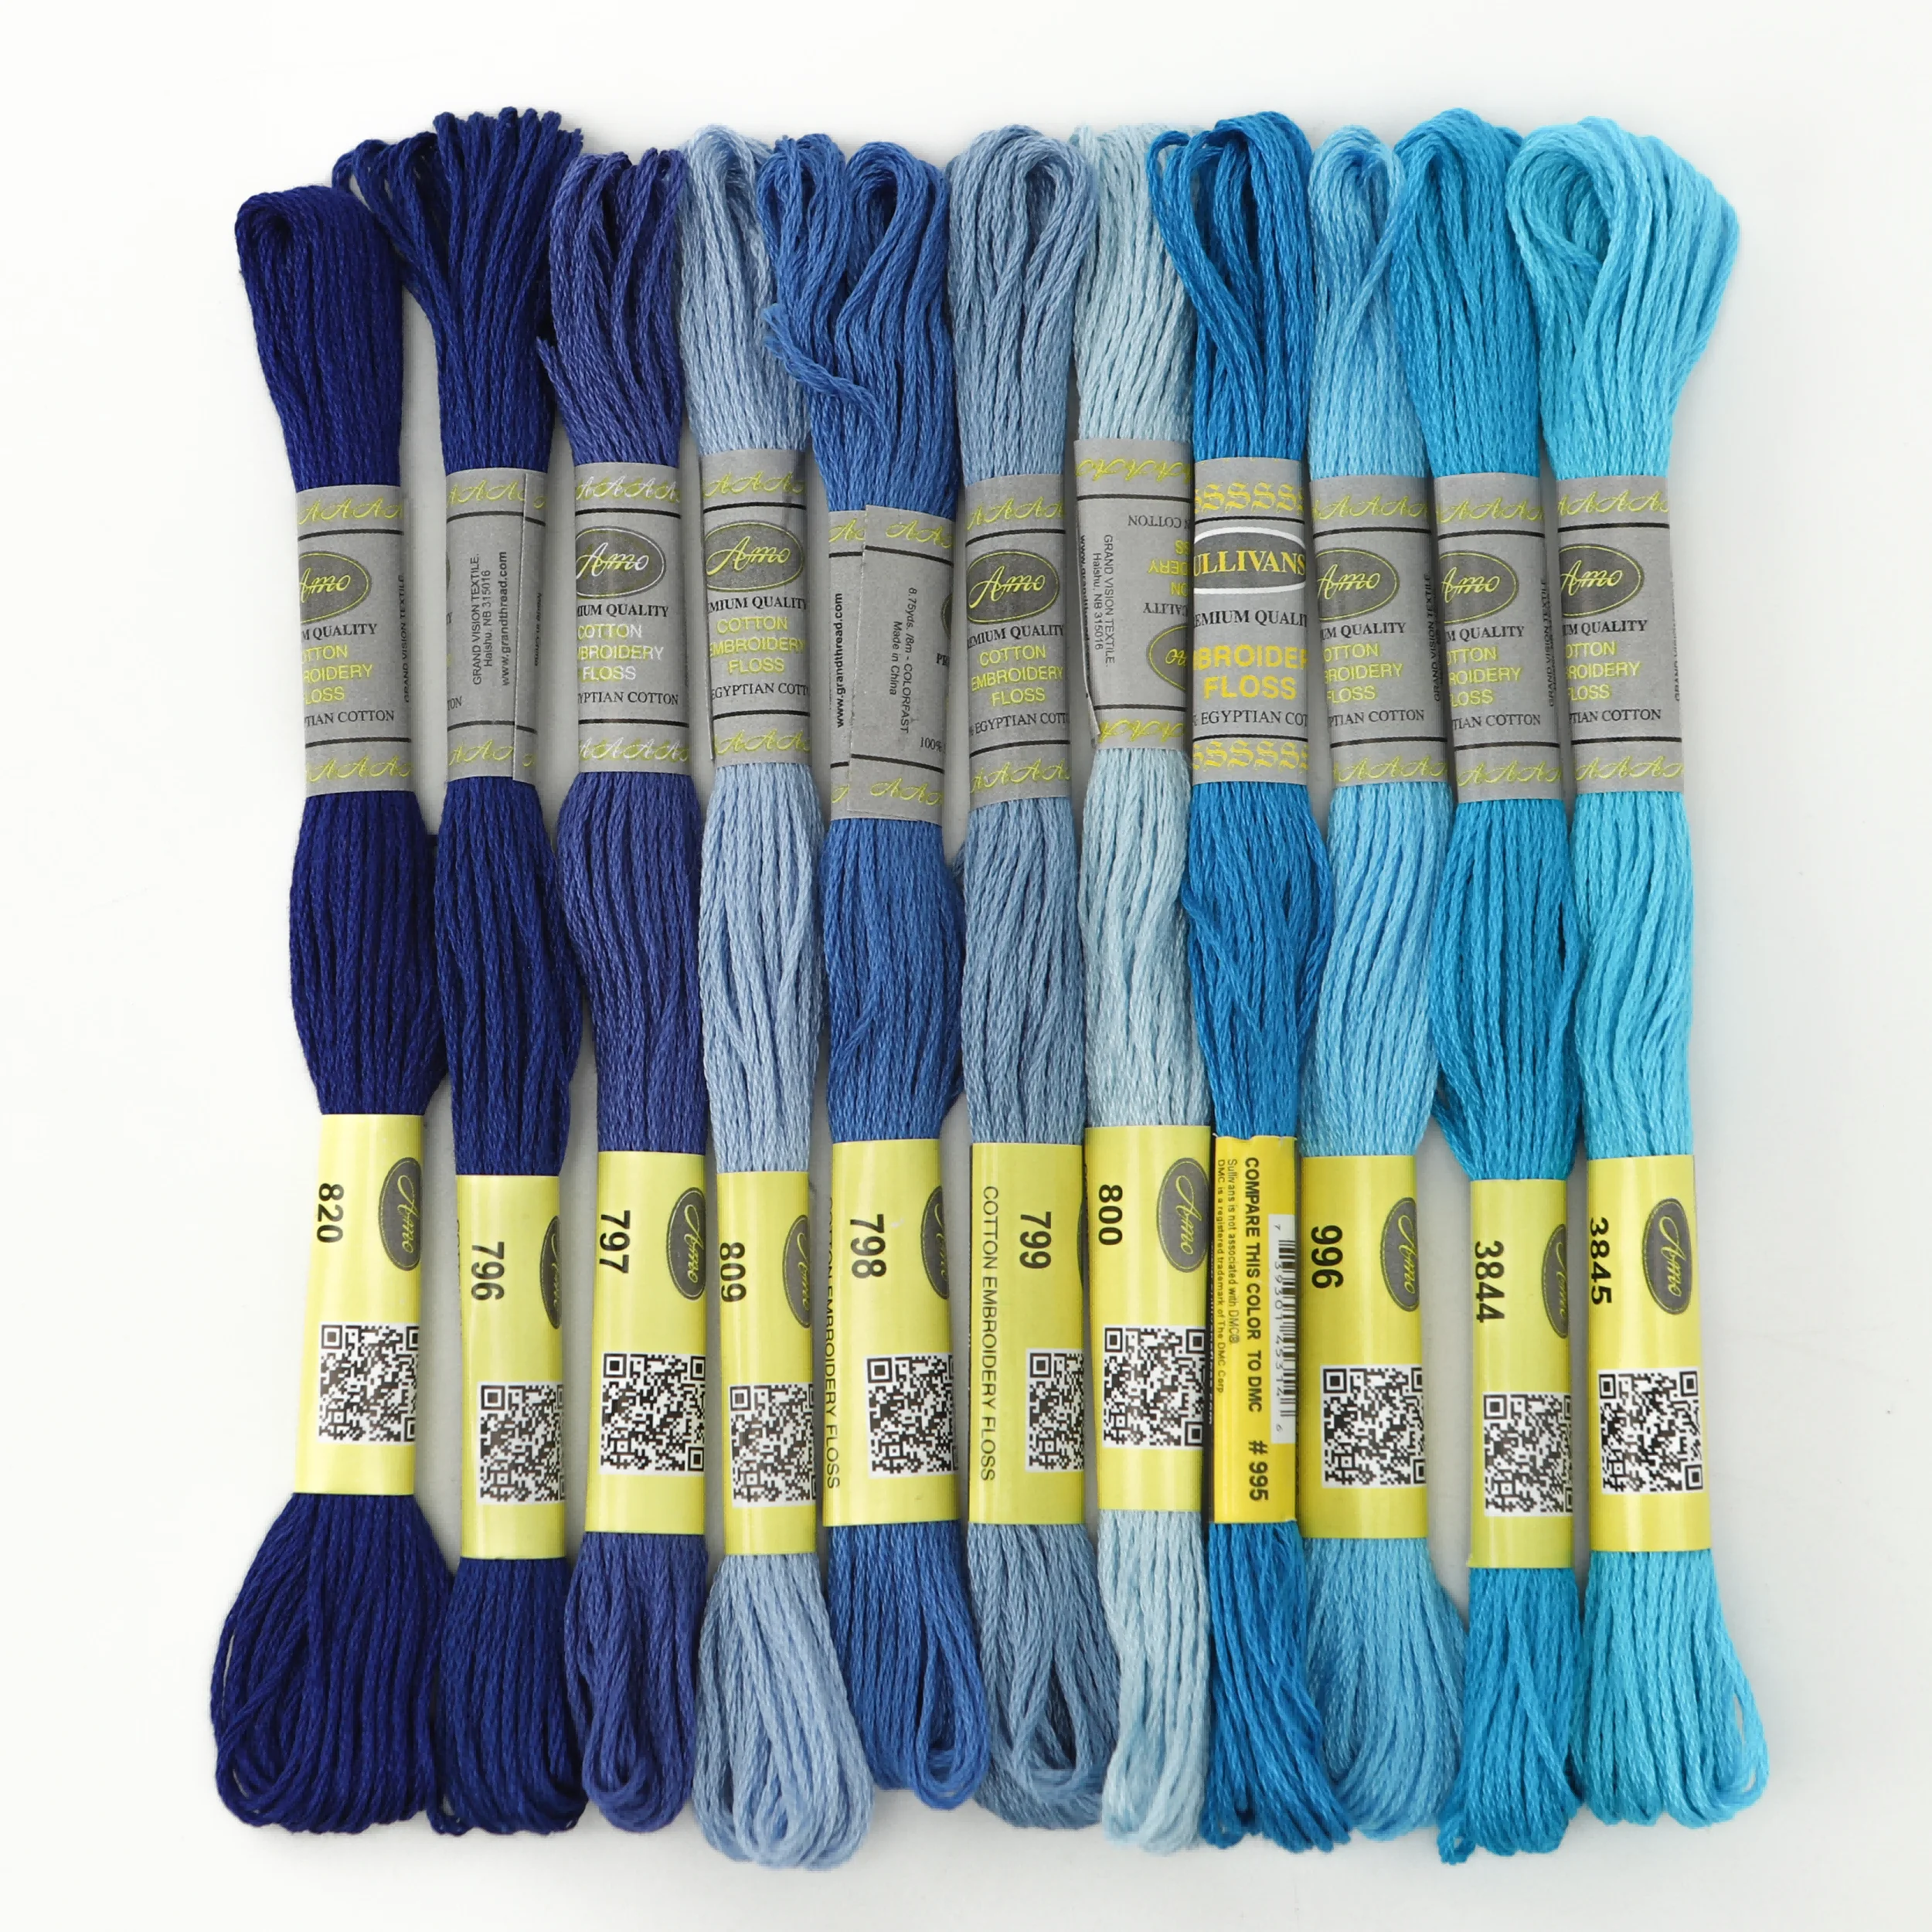 AmoHilos 16 New DMC Colors Set Mercerized Egyptian Cotton Embroidery Floss  8 Meters Skein Cross Stitch Thread DIY Crochet Thread